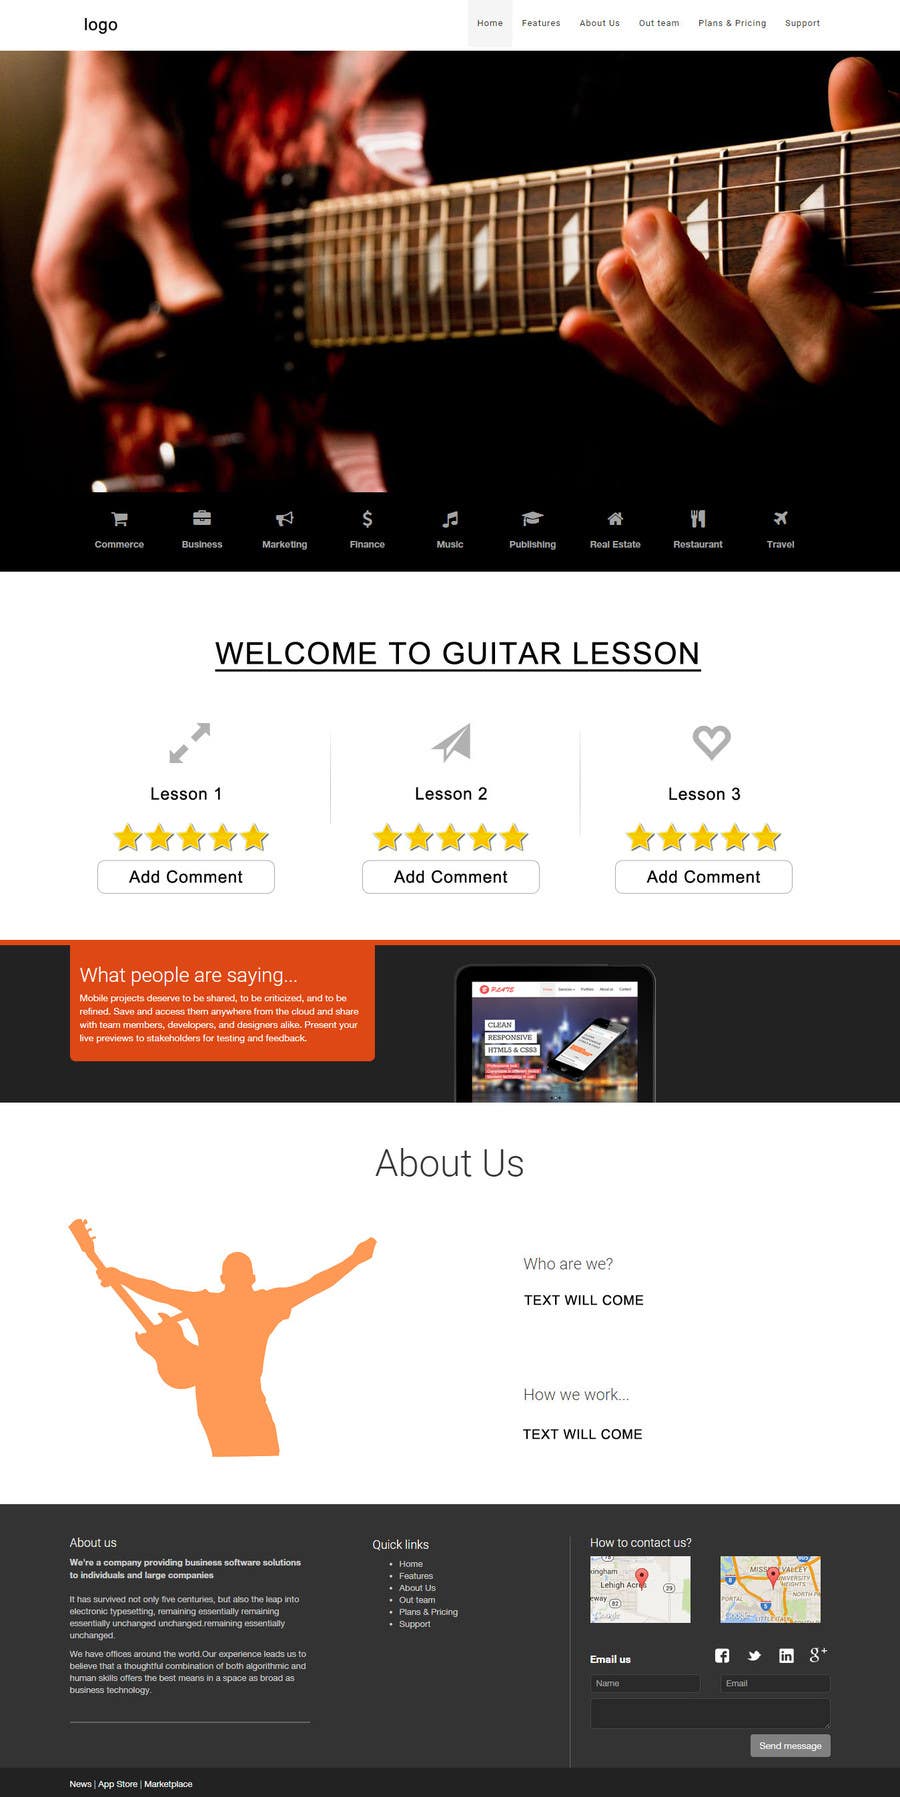 Zgłoszenie konkursowe o numerze #11 do konkursu o nazwie                                                 Design and built Guitarlesson compare website
                                            